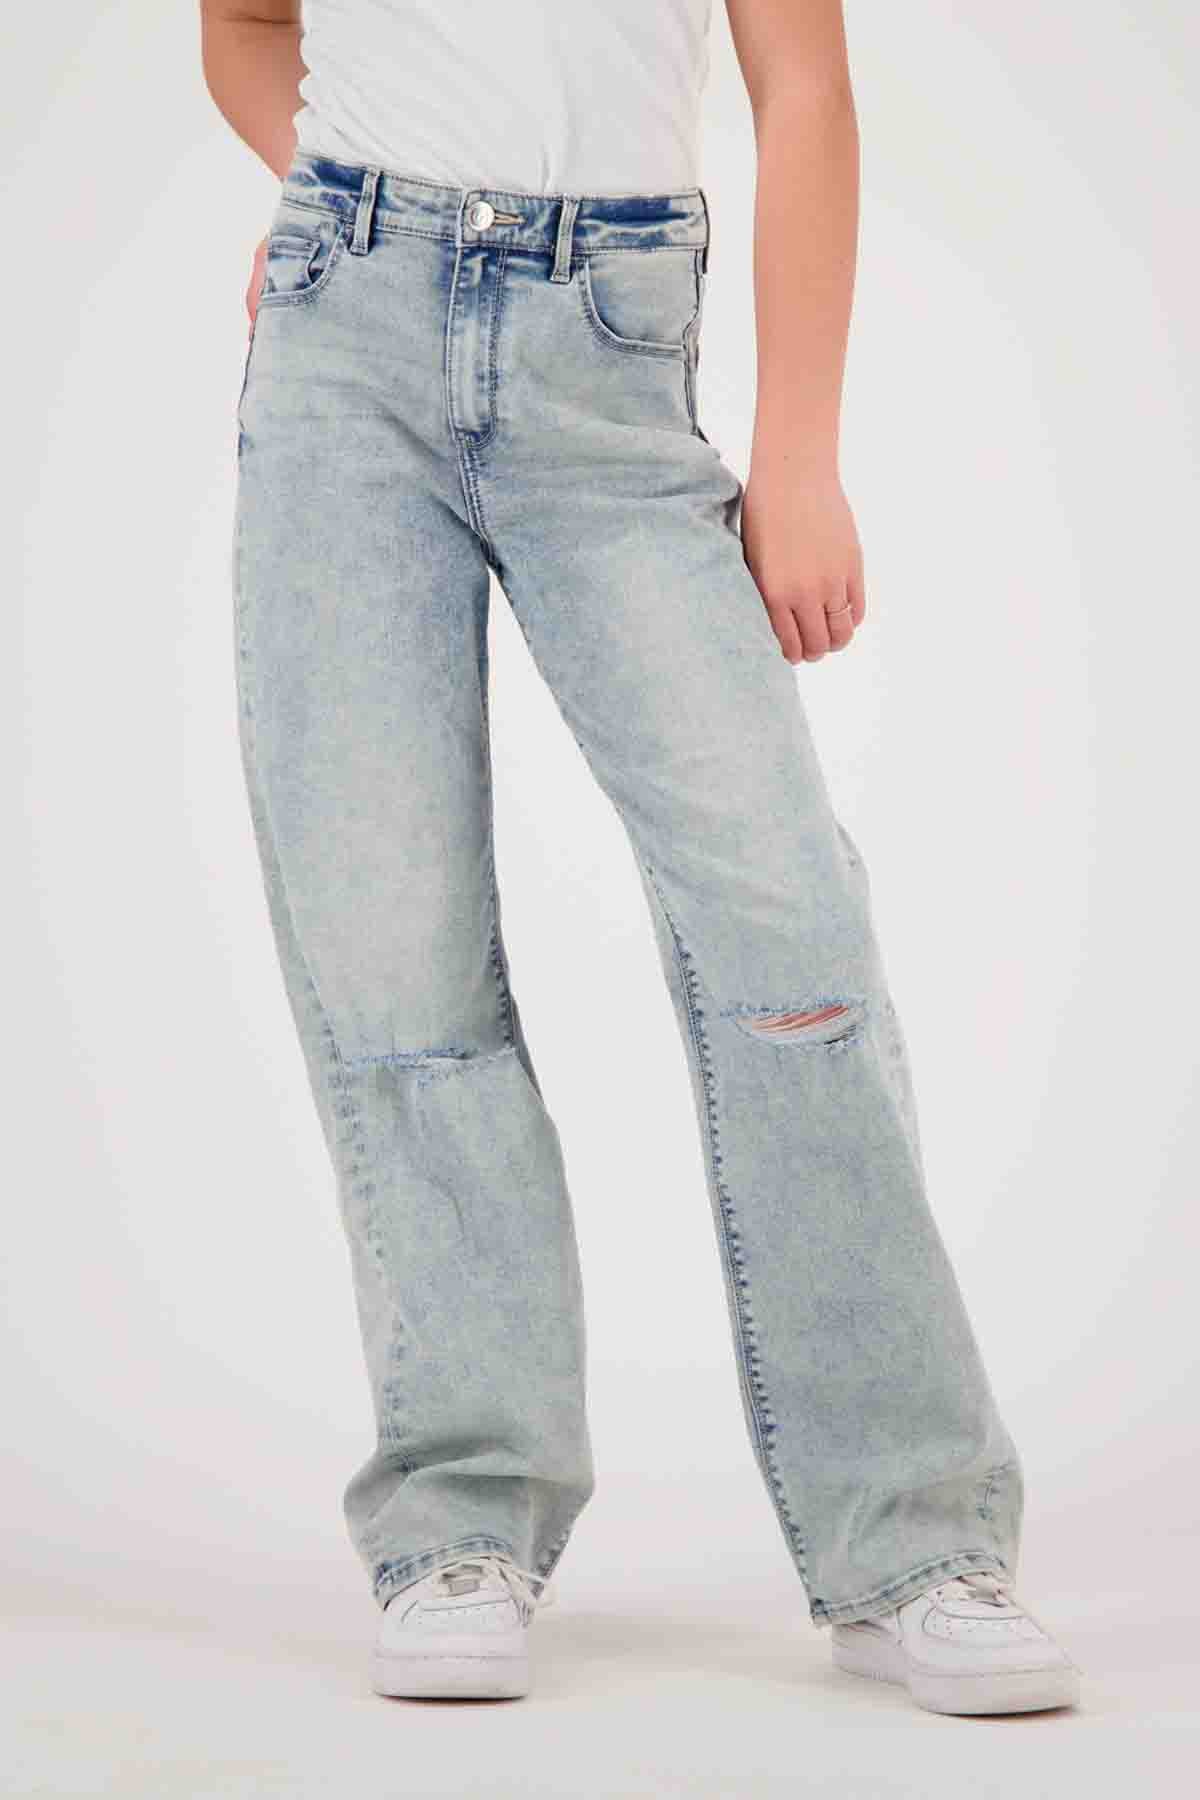 Jeans Sydney